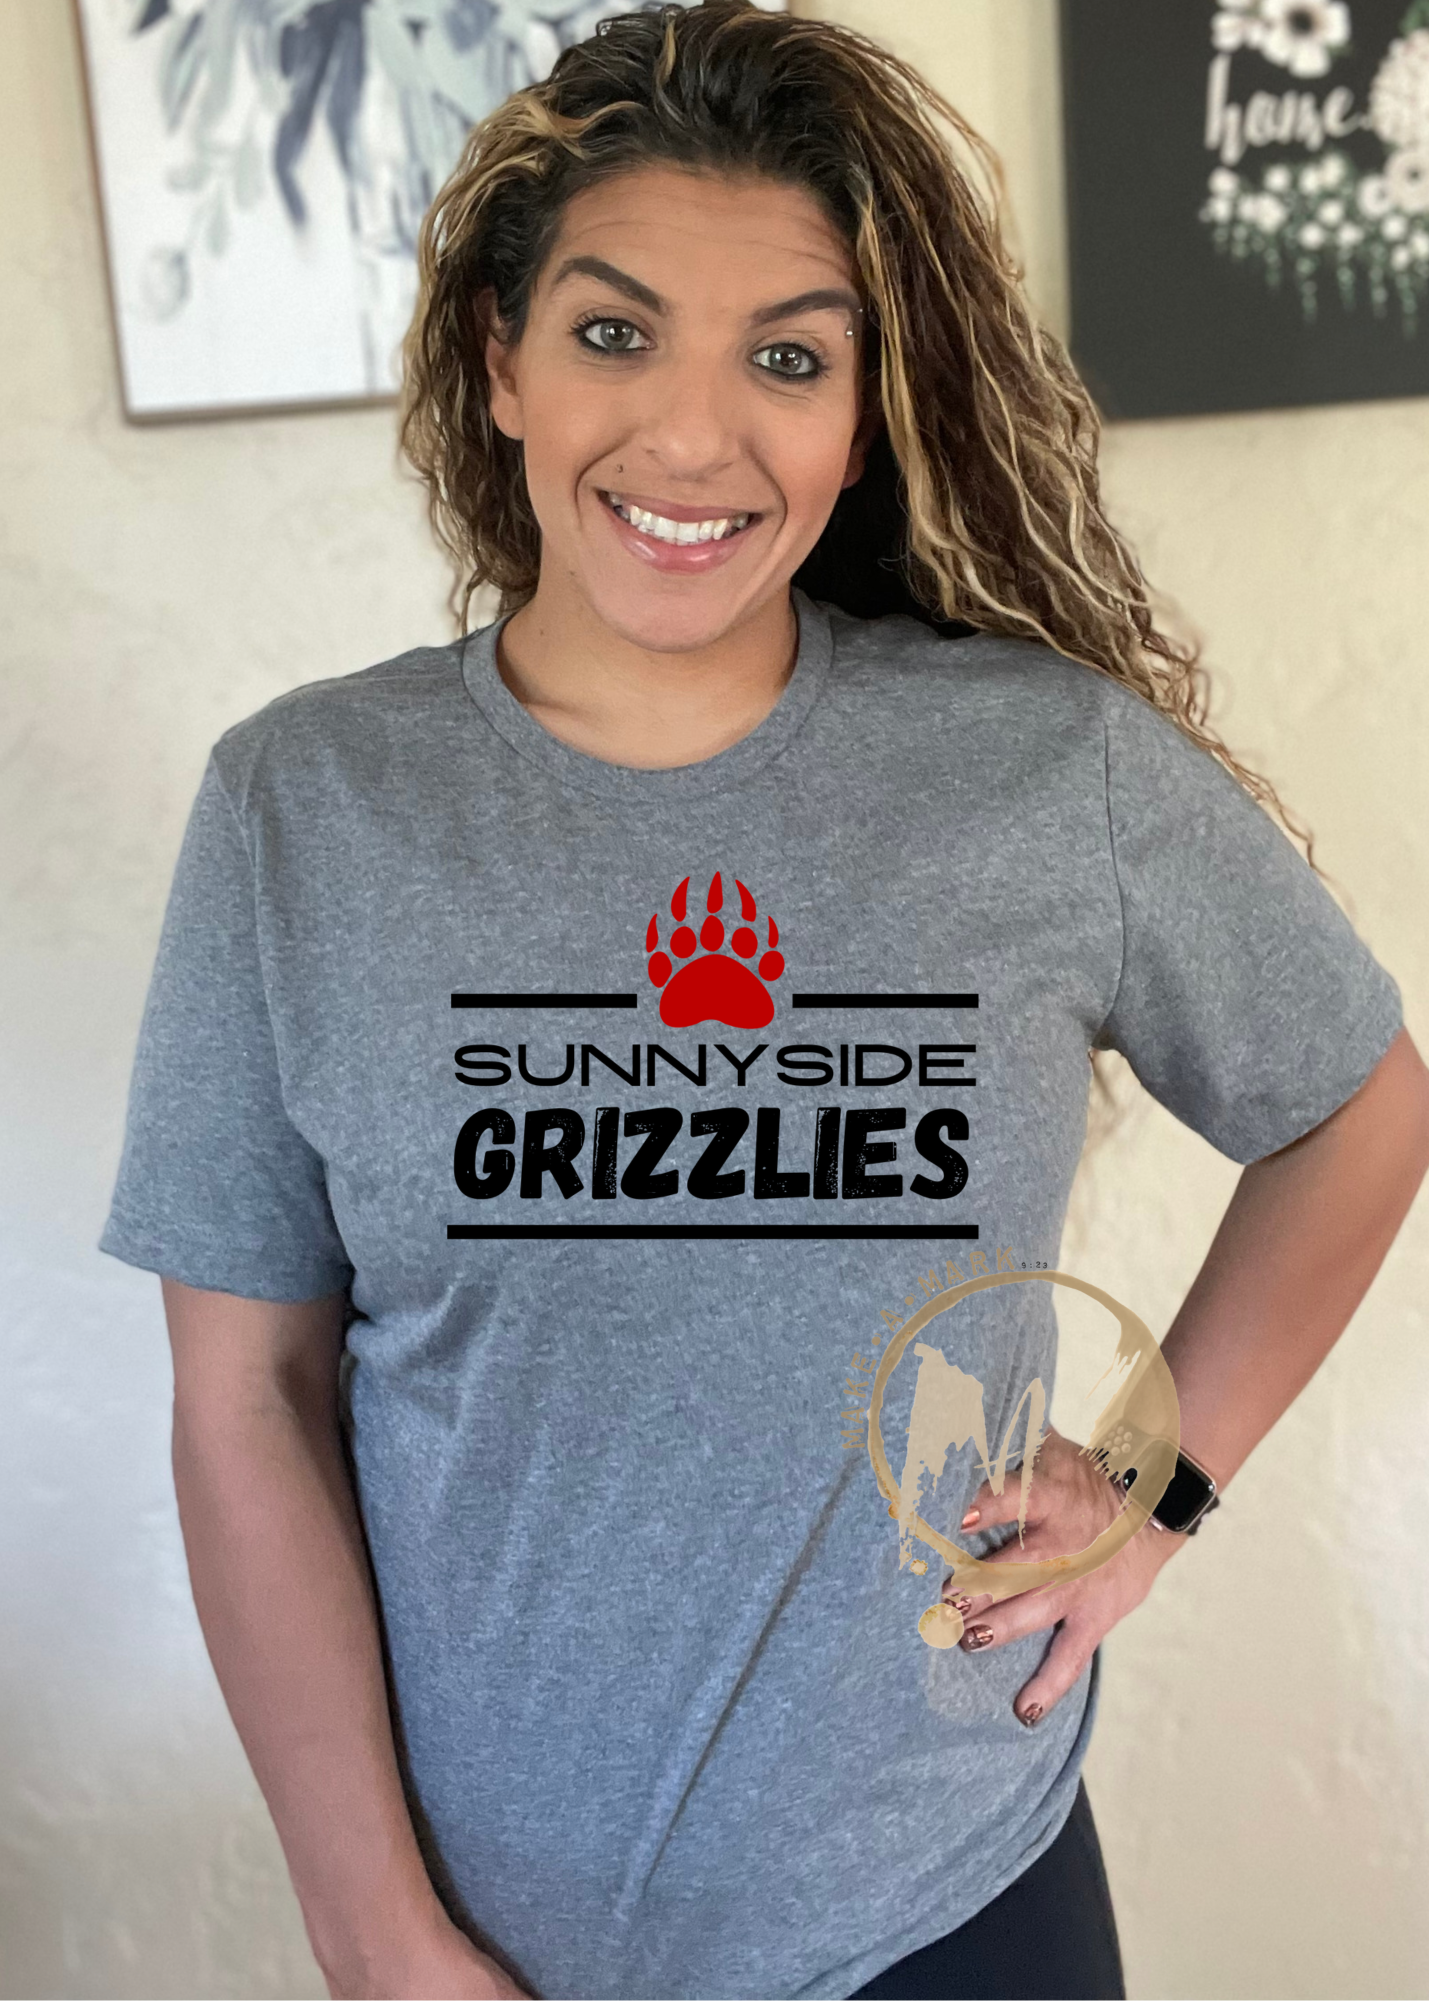 Sunnyside Grizzlies